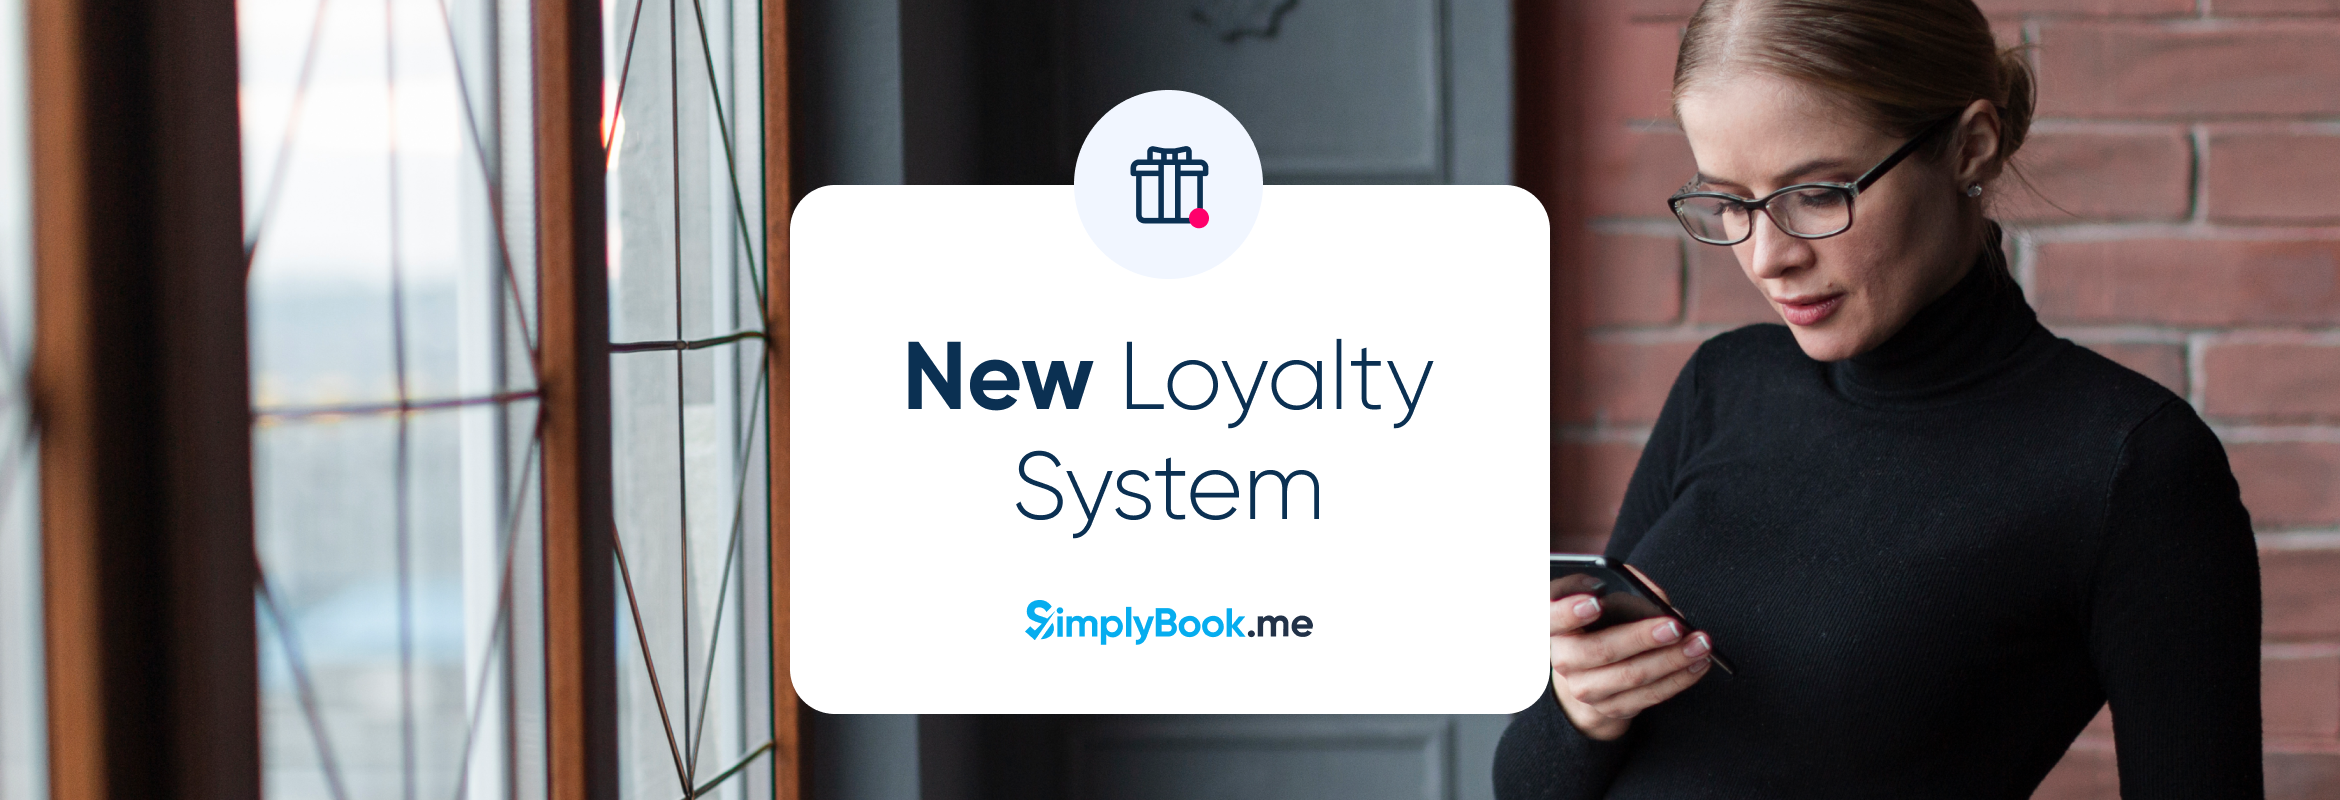 New Loyalty System